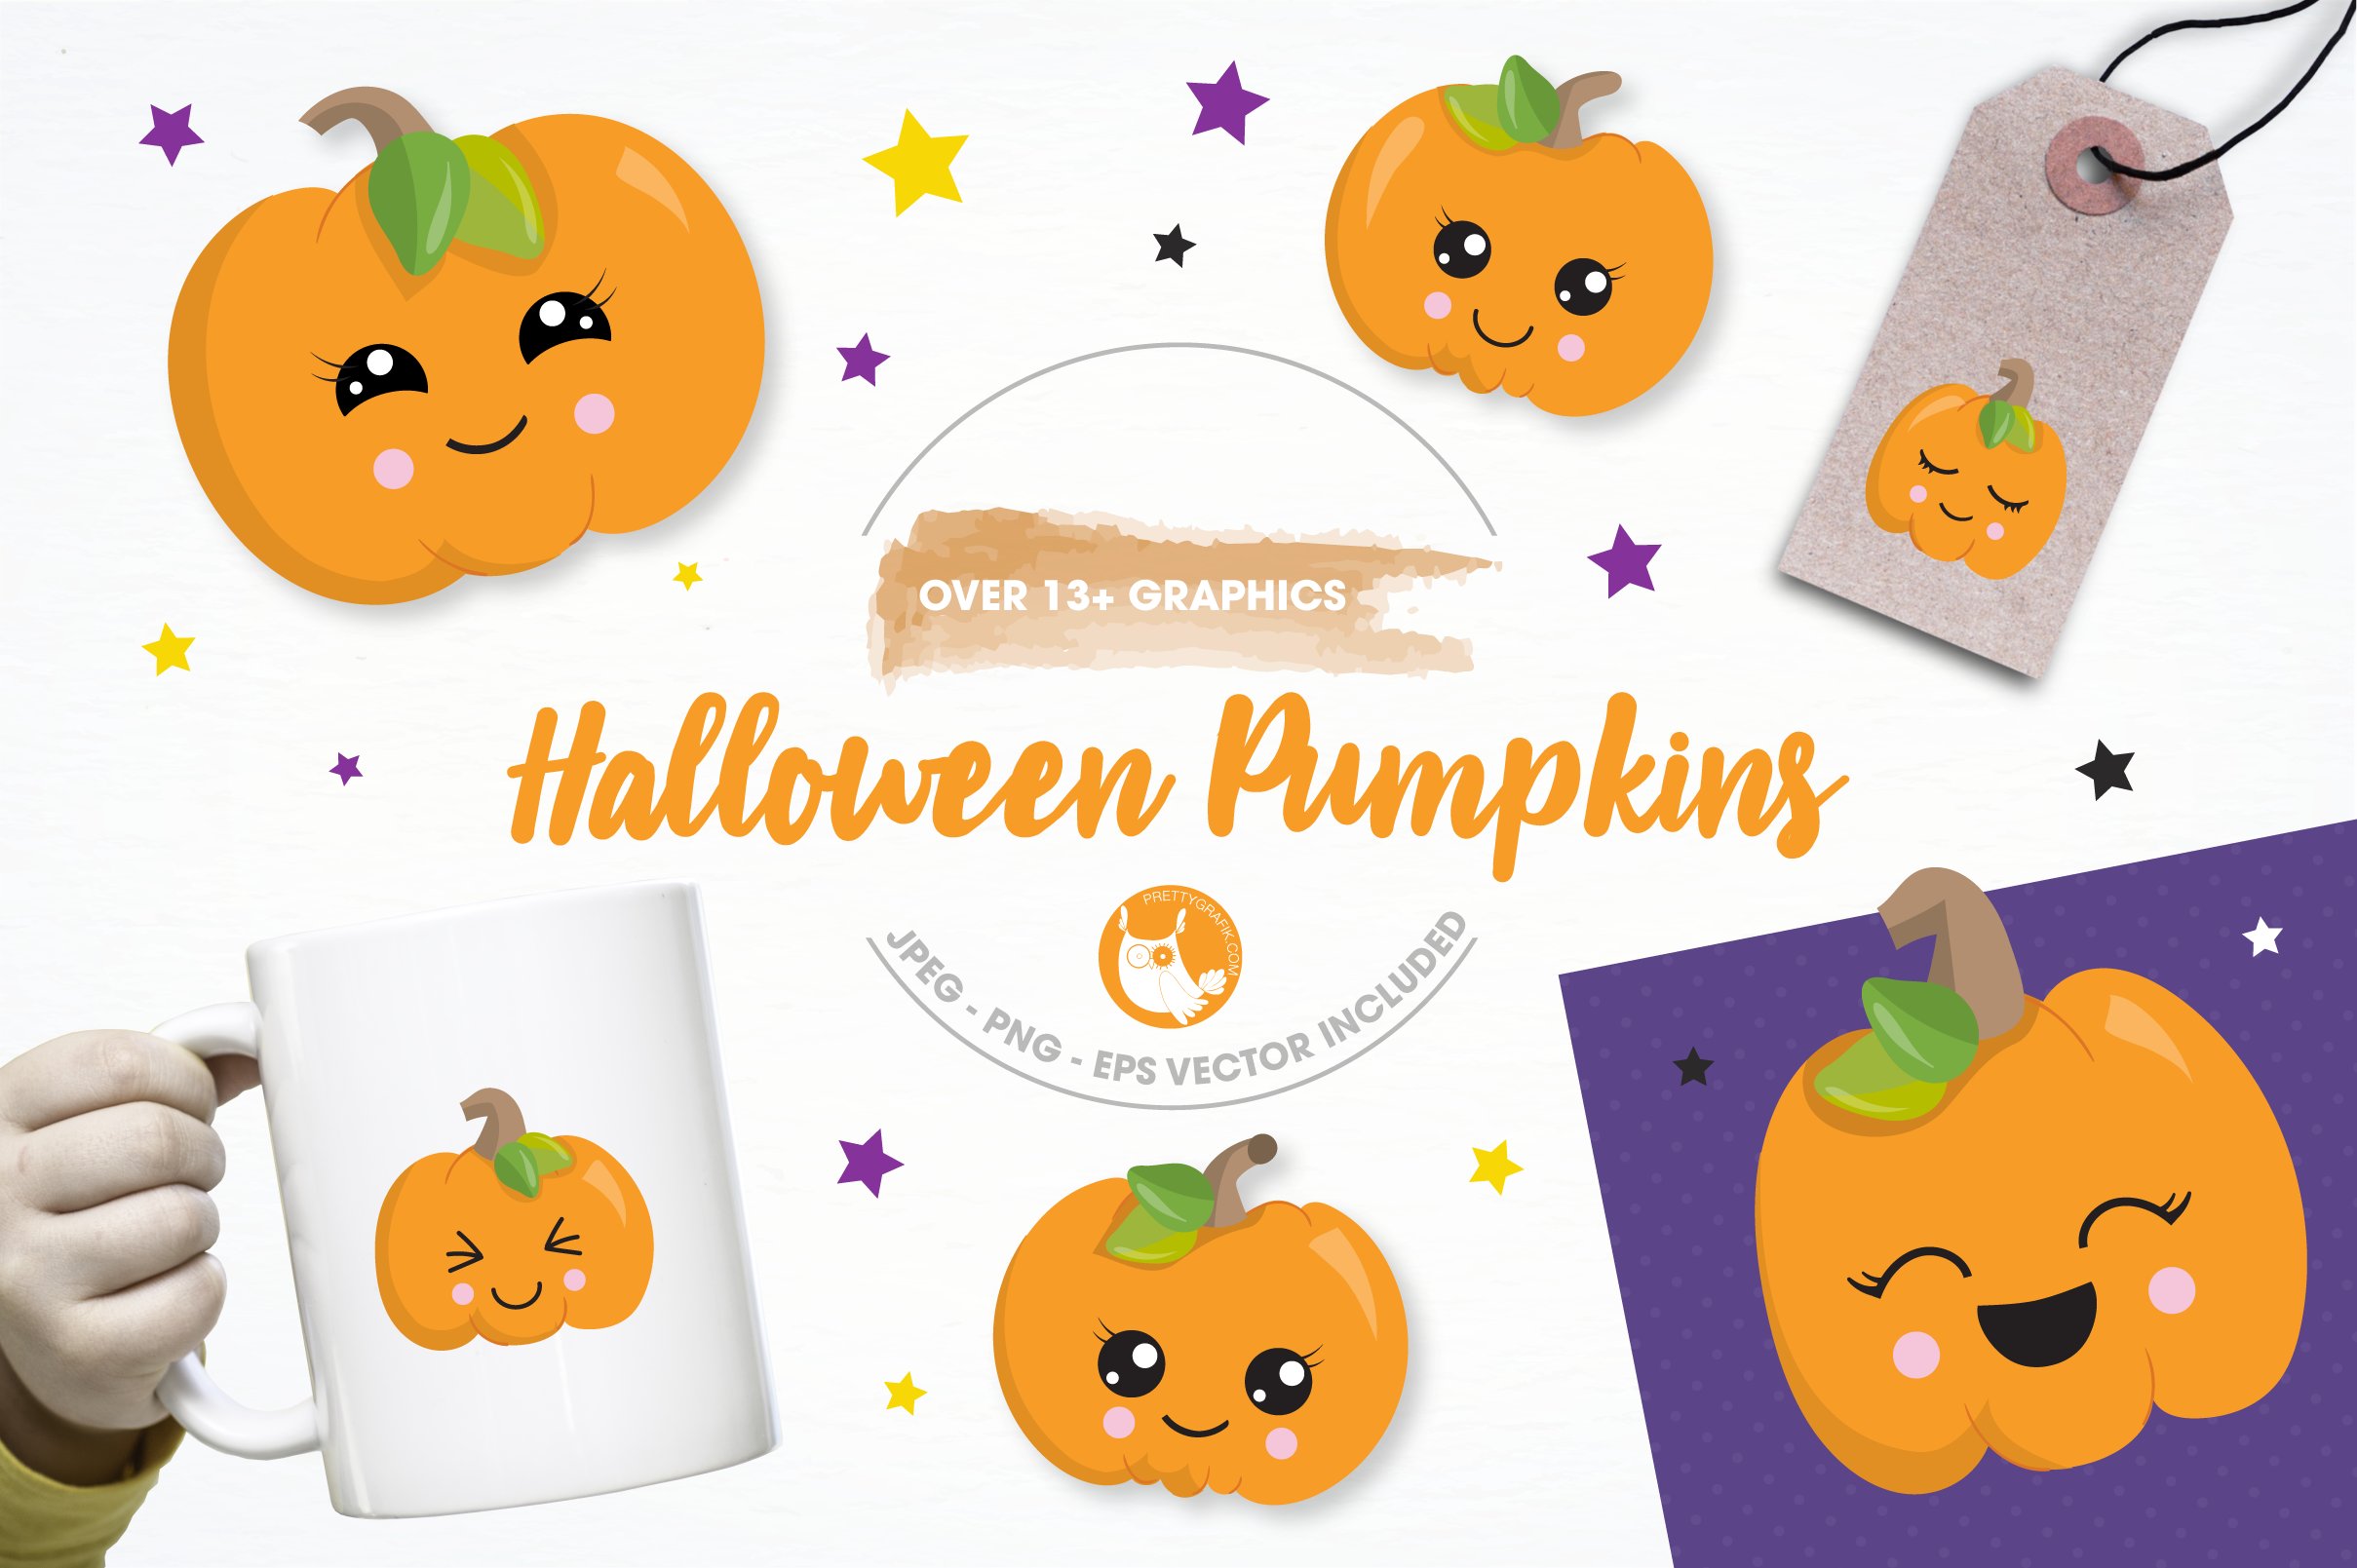 Halloween Pumpkin Illustration Pack - Vector Image